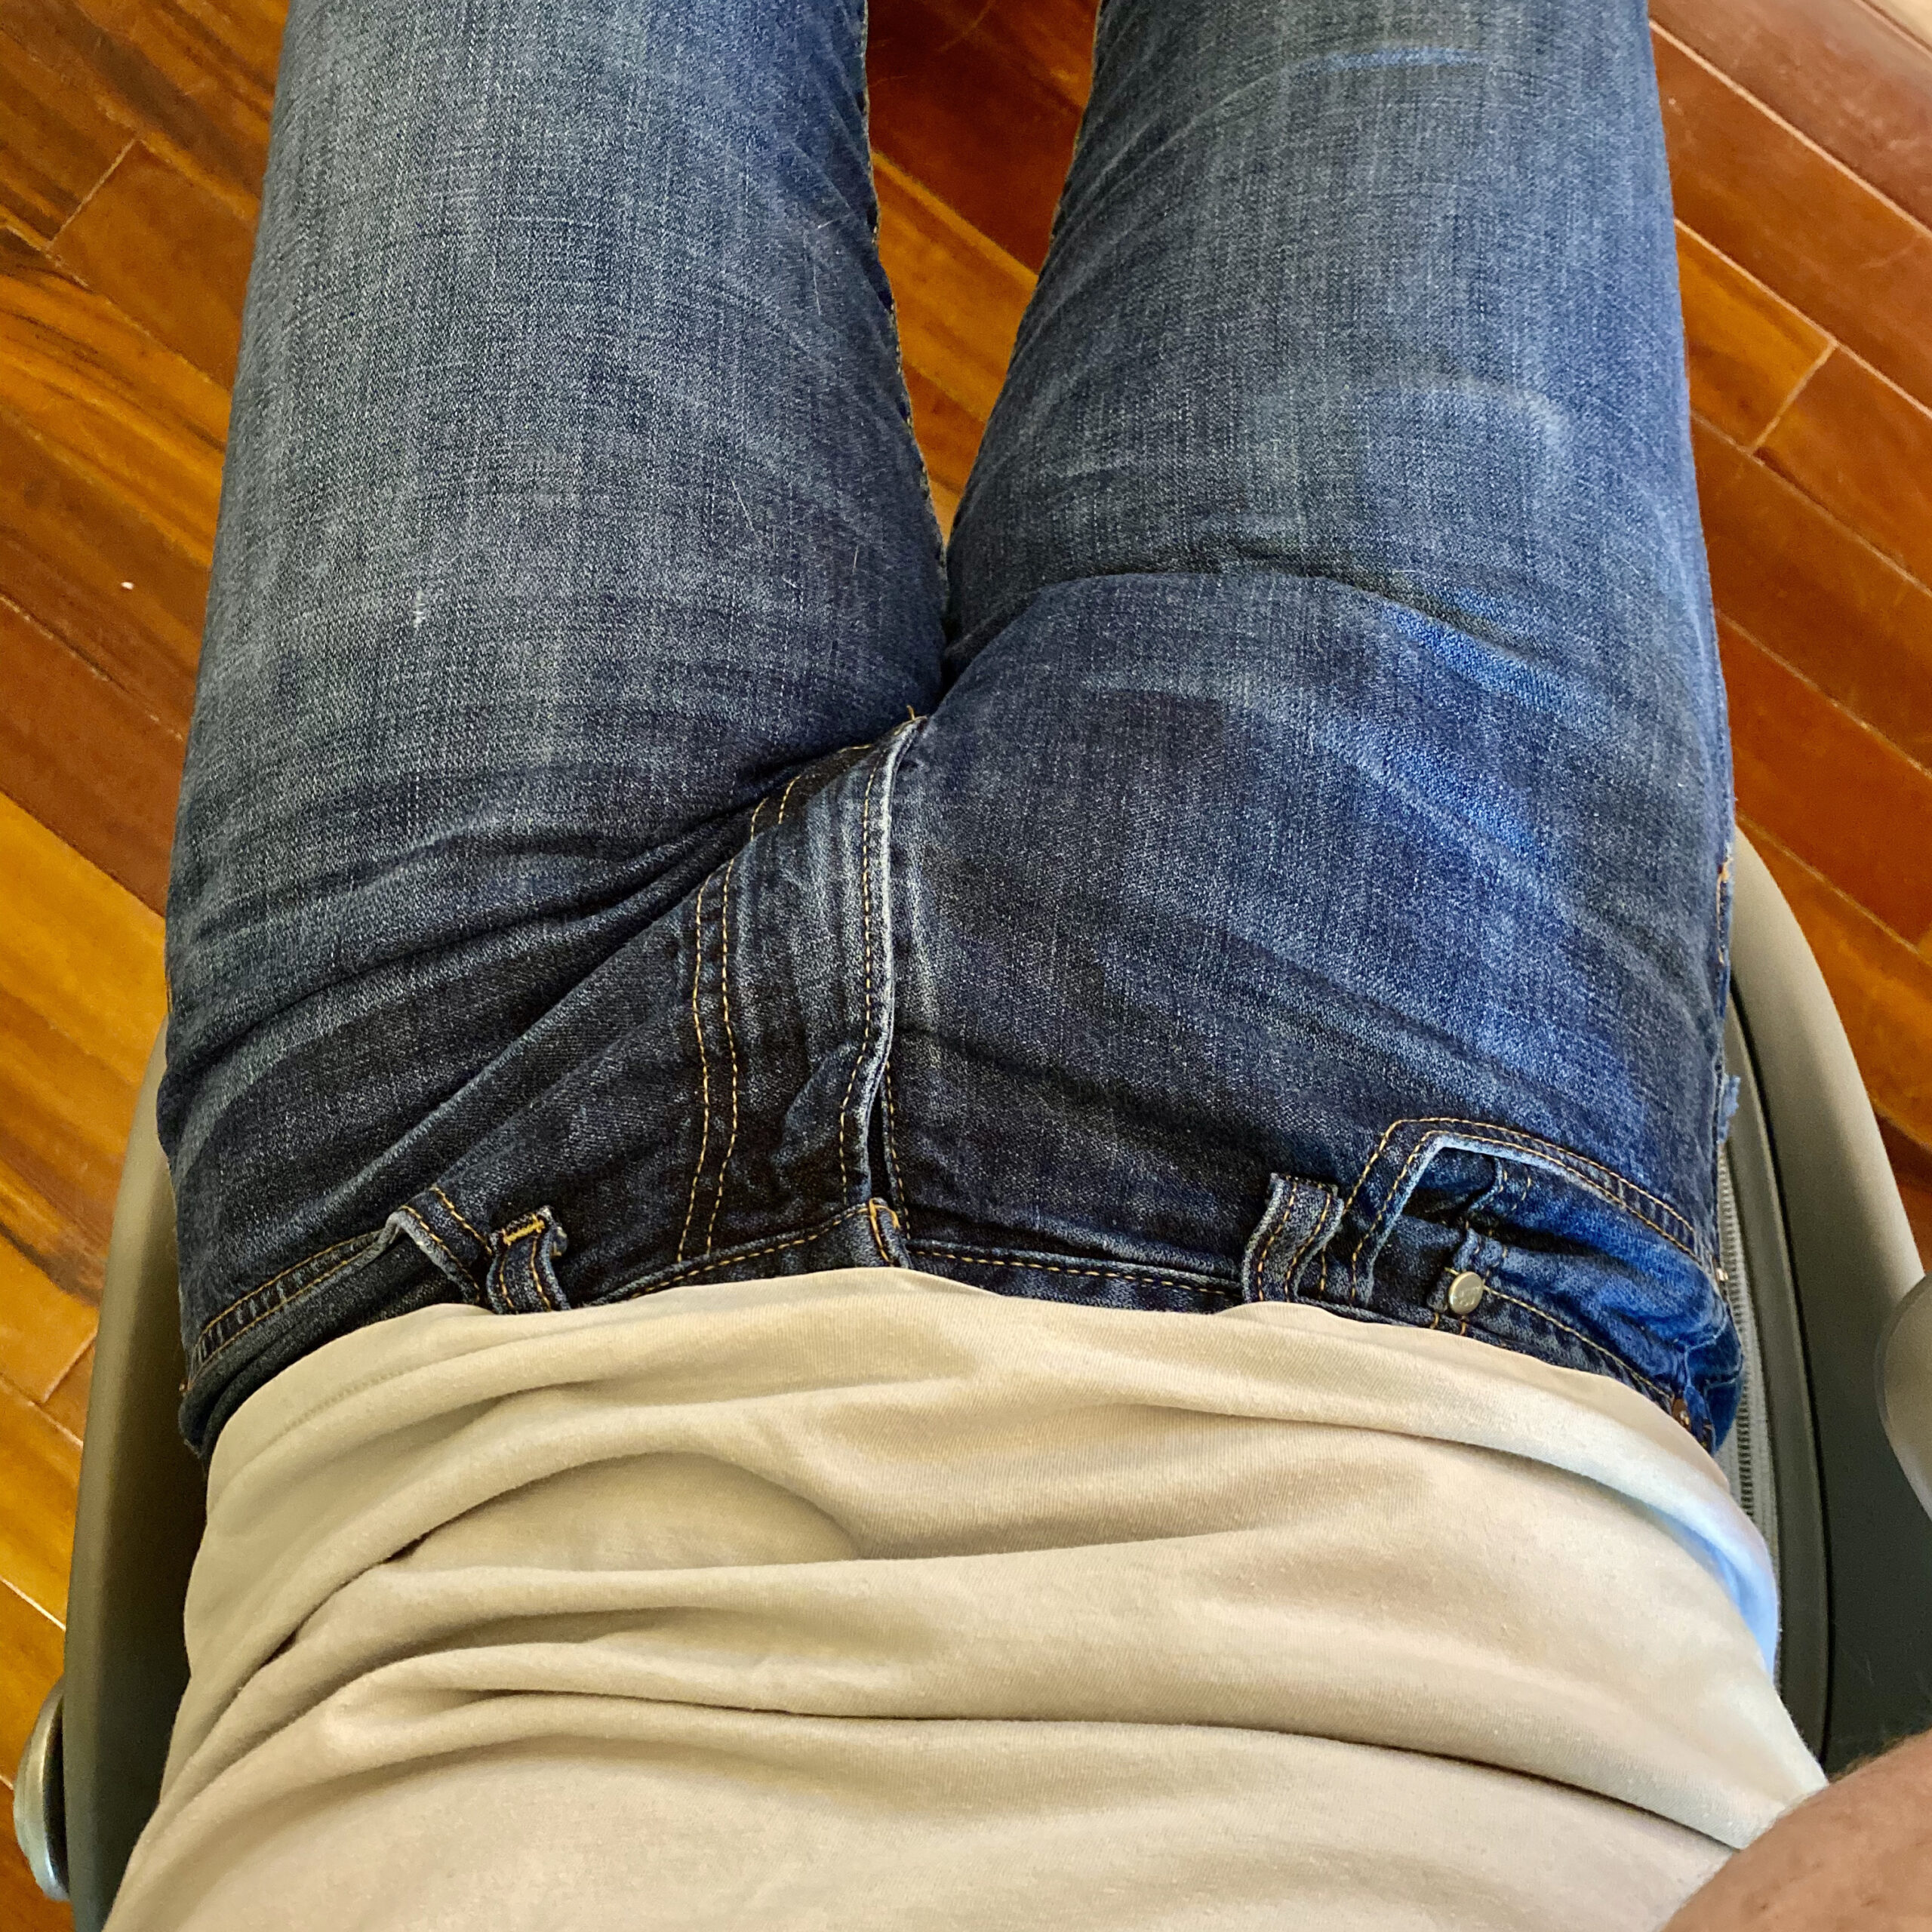 Huge Dick In Jeans